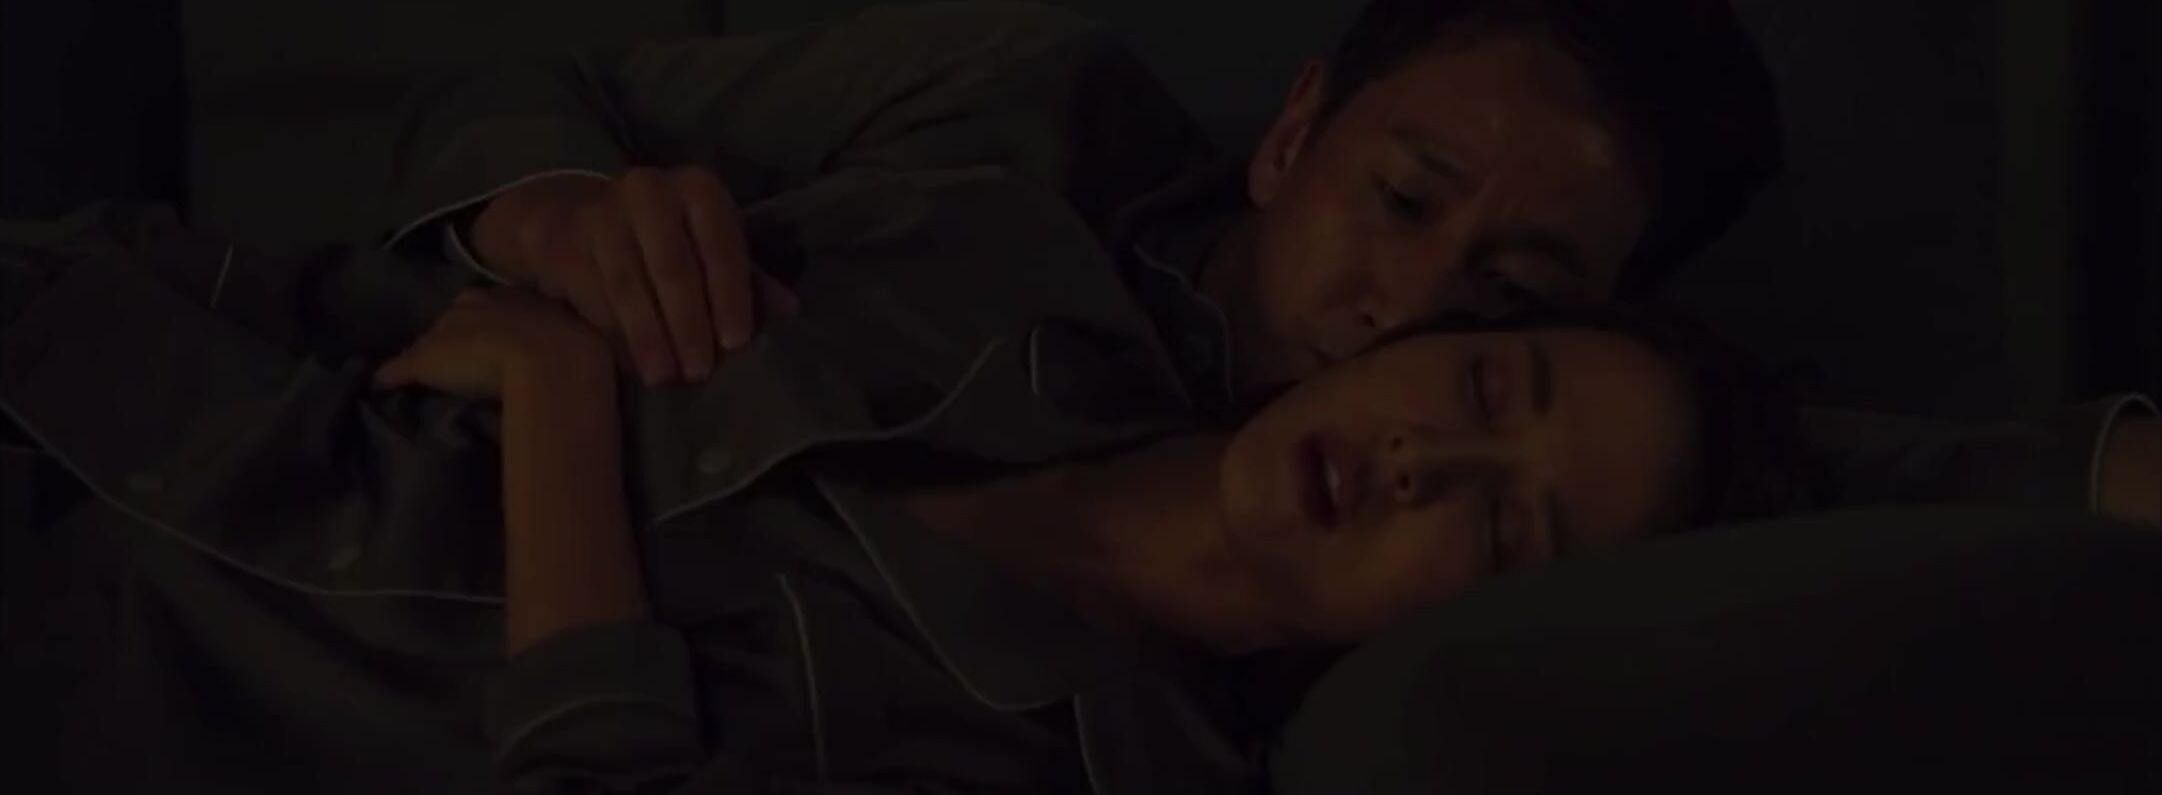 Brazzers Korean movie Parasite mutual masturbation explicit moment with Jo Yeo-jeong Kissing - 1